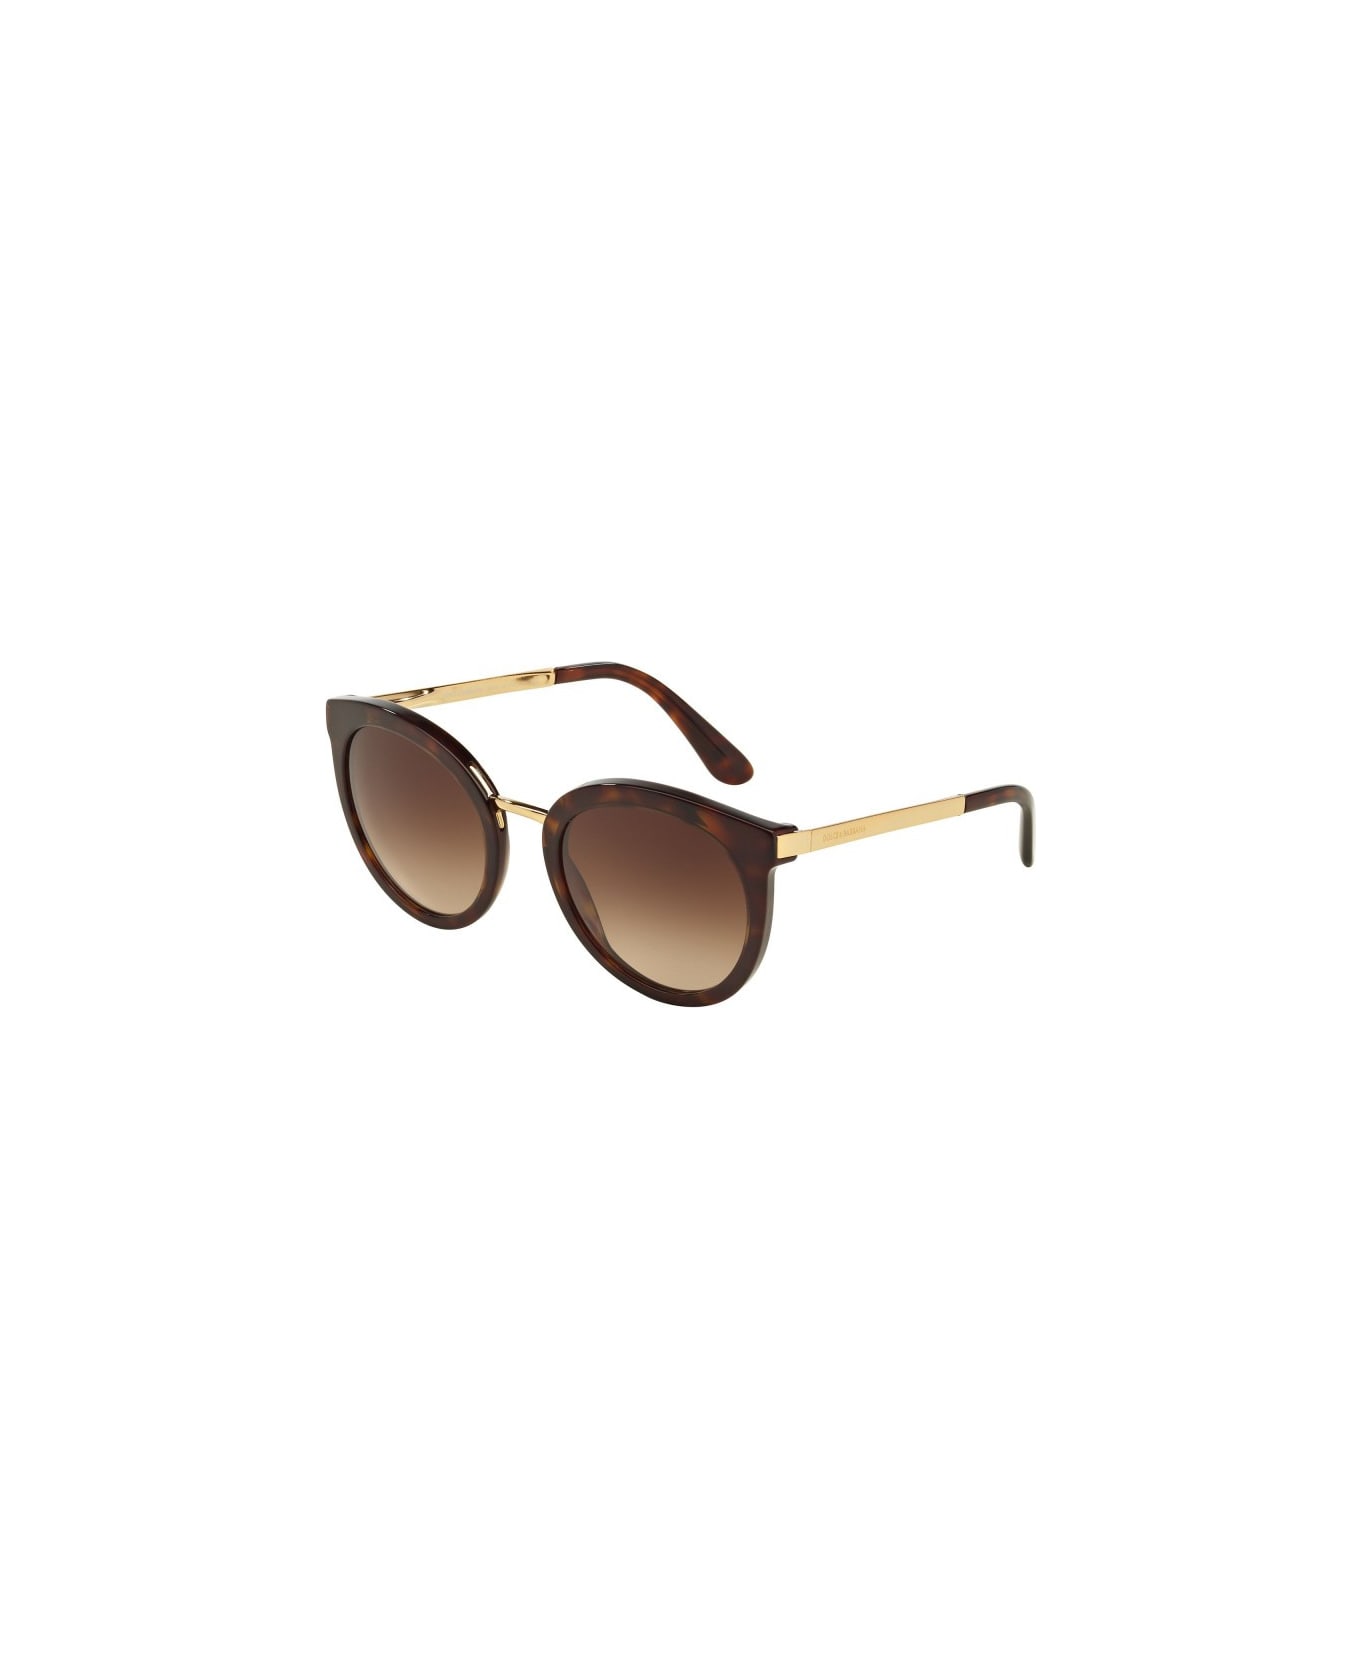 Dolce & Gabbana Eyewear dg4268 502/13 Sunglasses サングラス